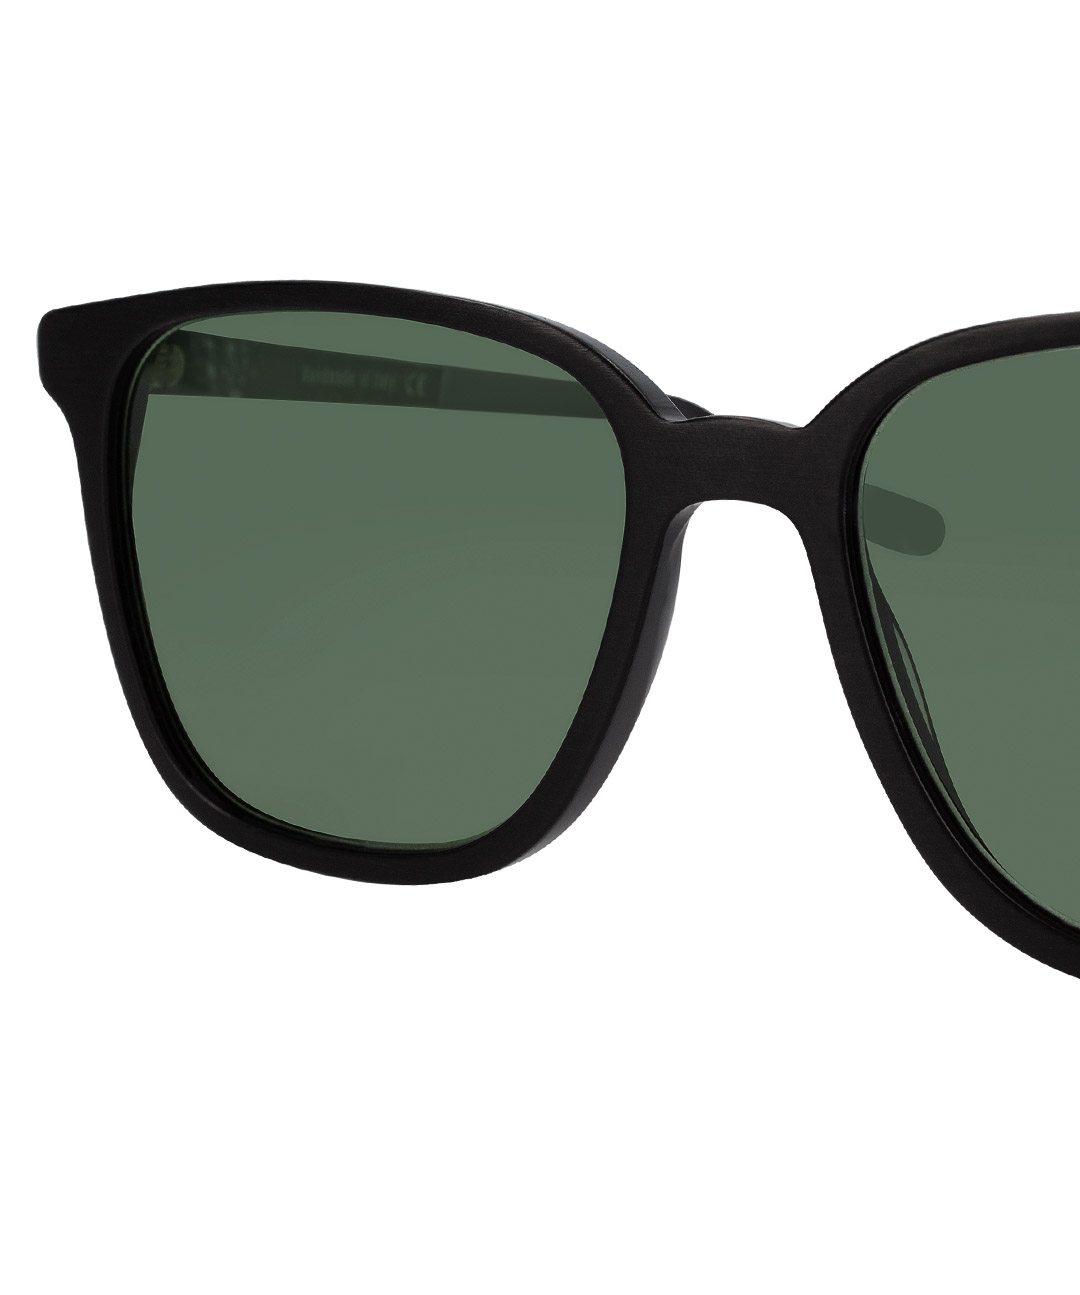 Sonnenbrille Boxhagener Black Matte Lilienthal Green Preisgekrönte | Berlin Designs 